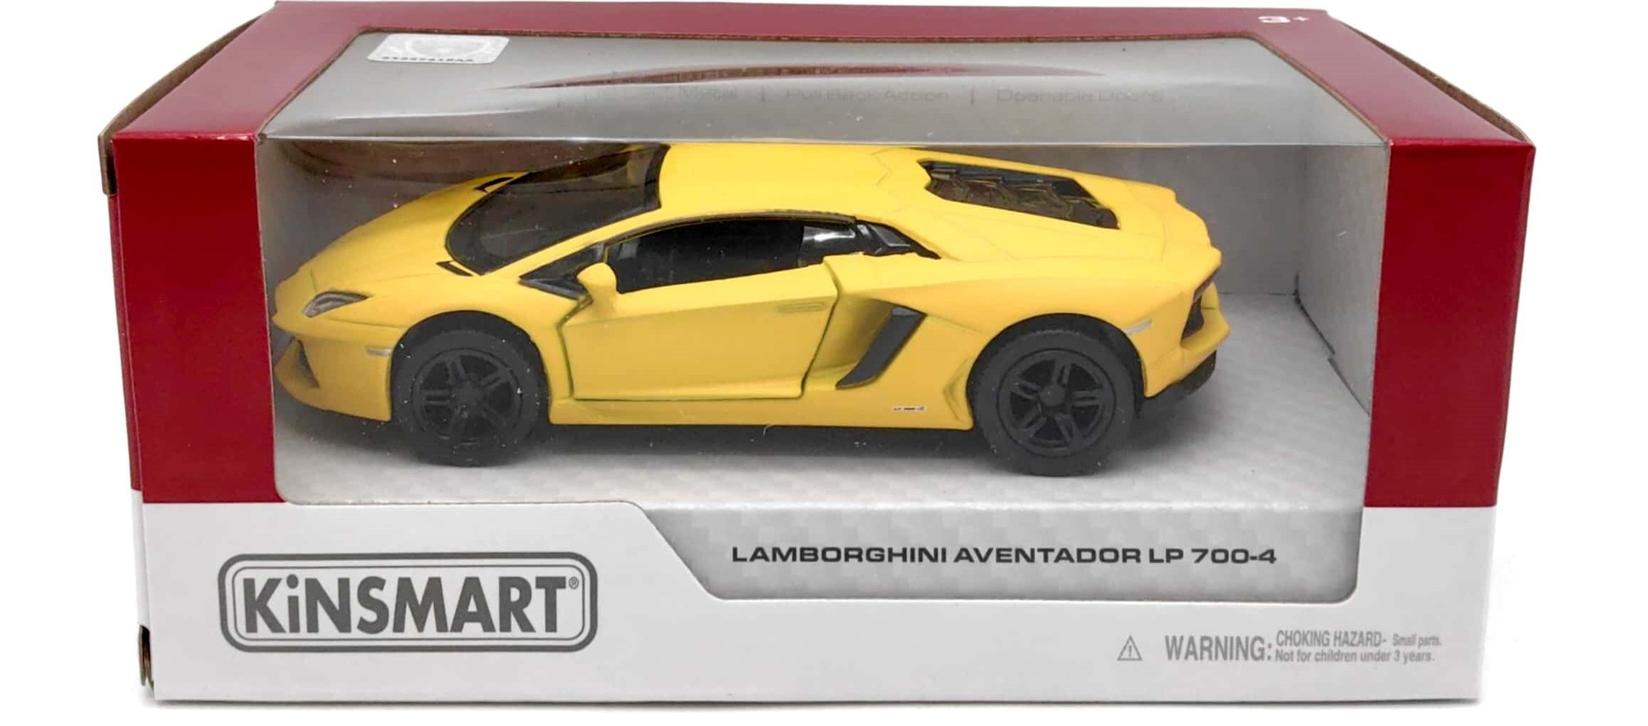 Lamborghini Aventador LP 700-4 1:36